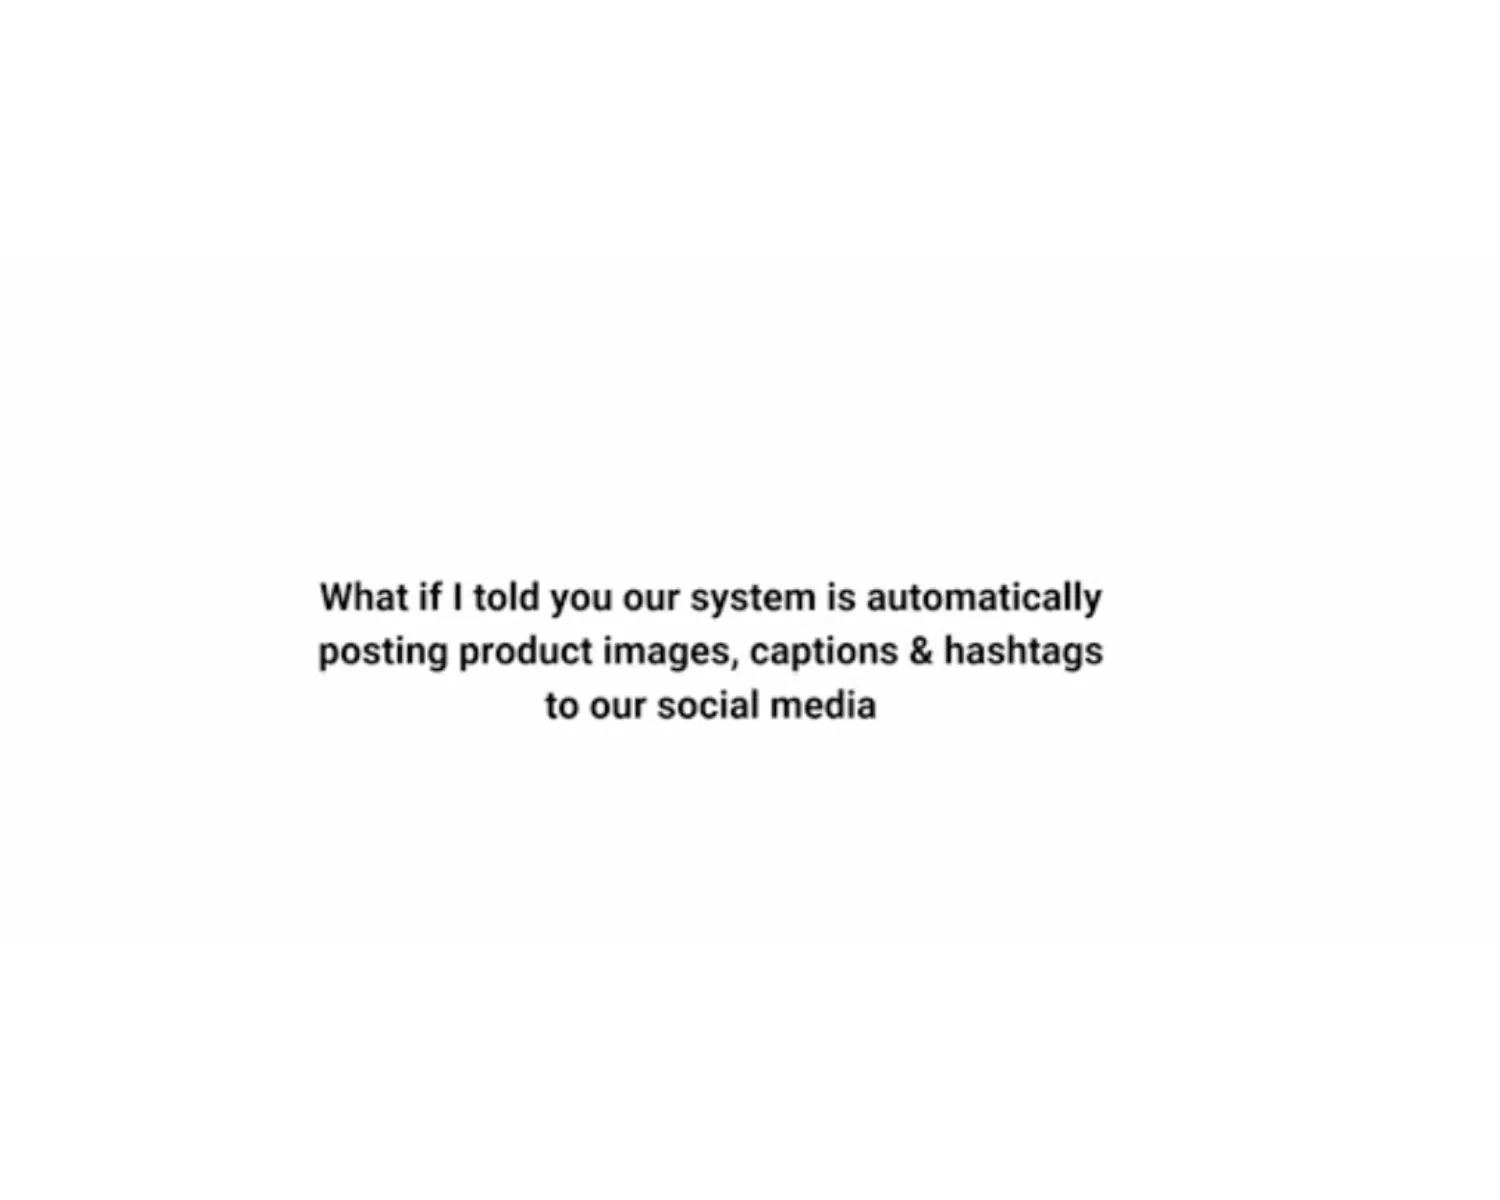 Social media automation